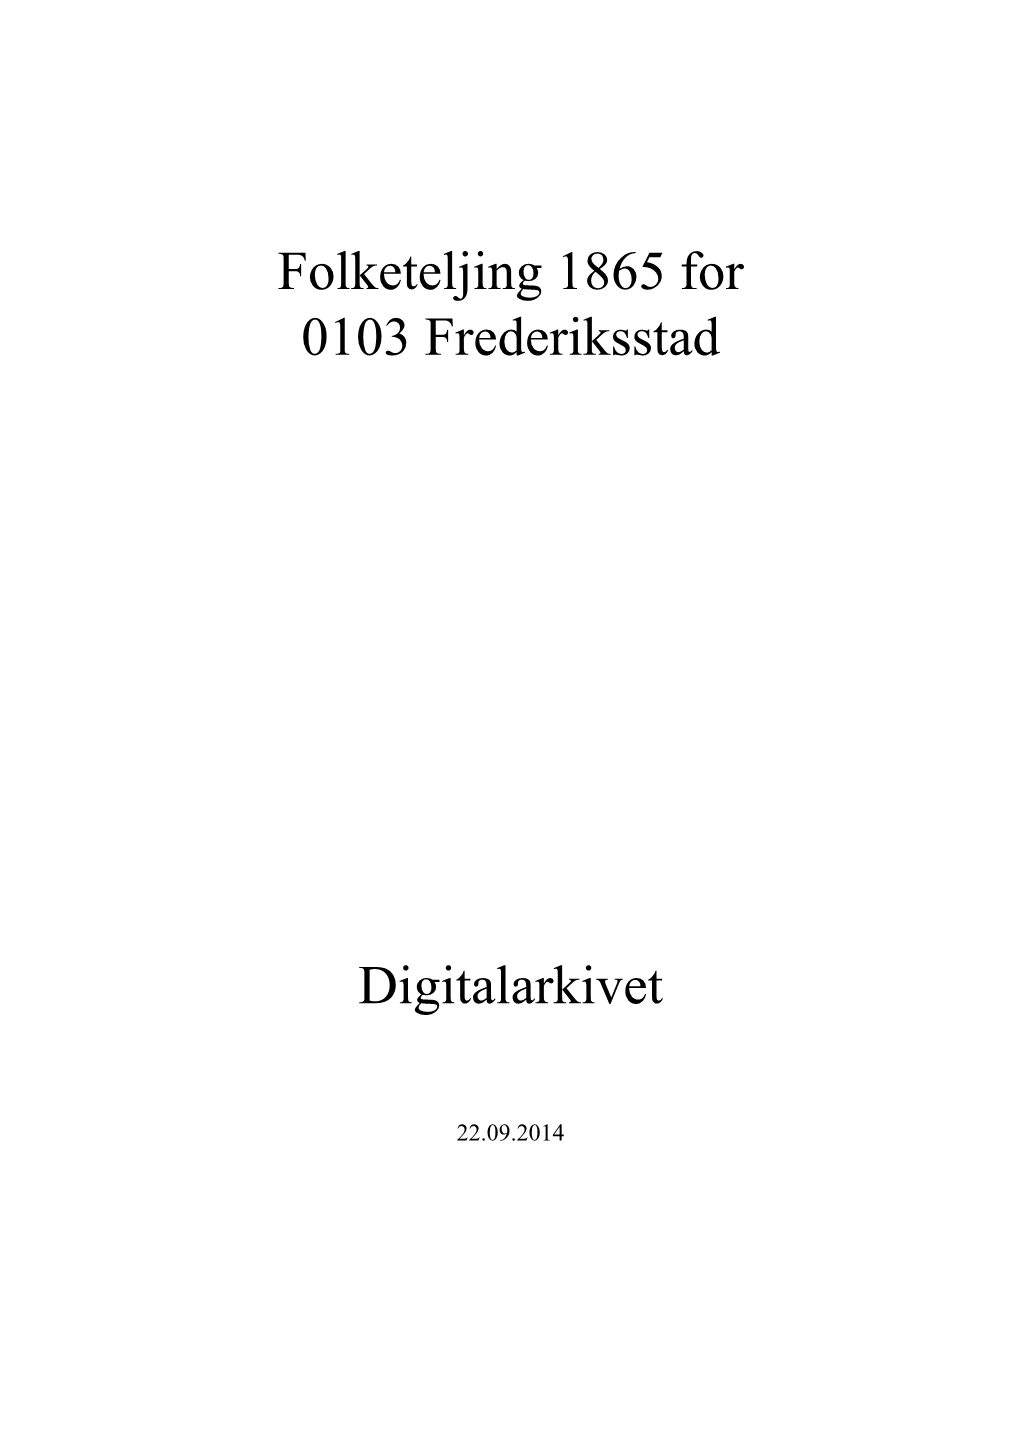 Folketeljing 1865 for 0103 Frederiksstad Digitalarkivet